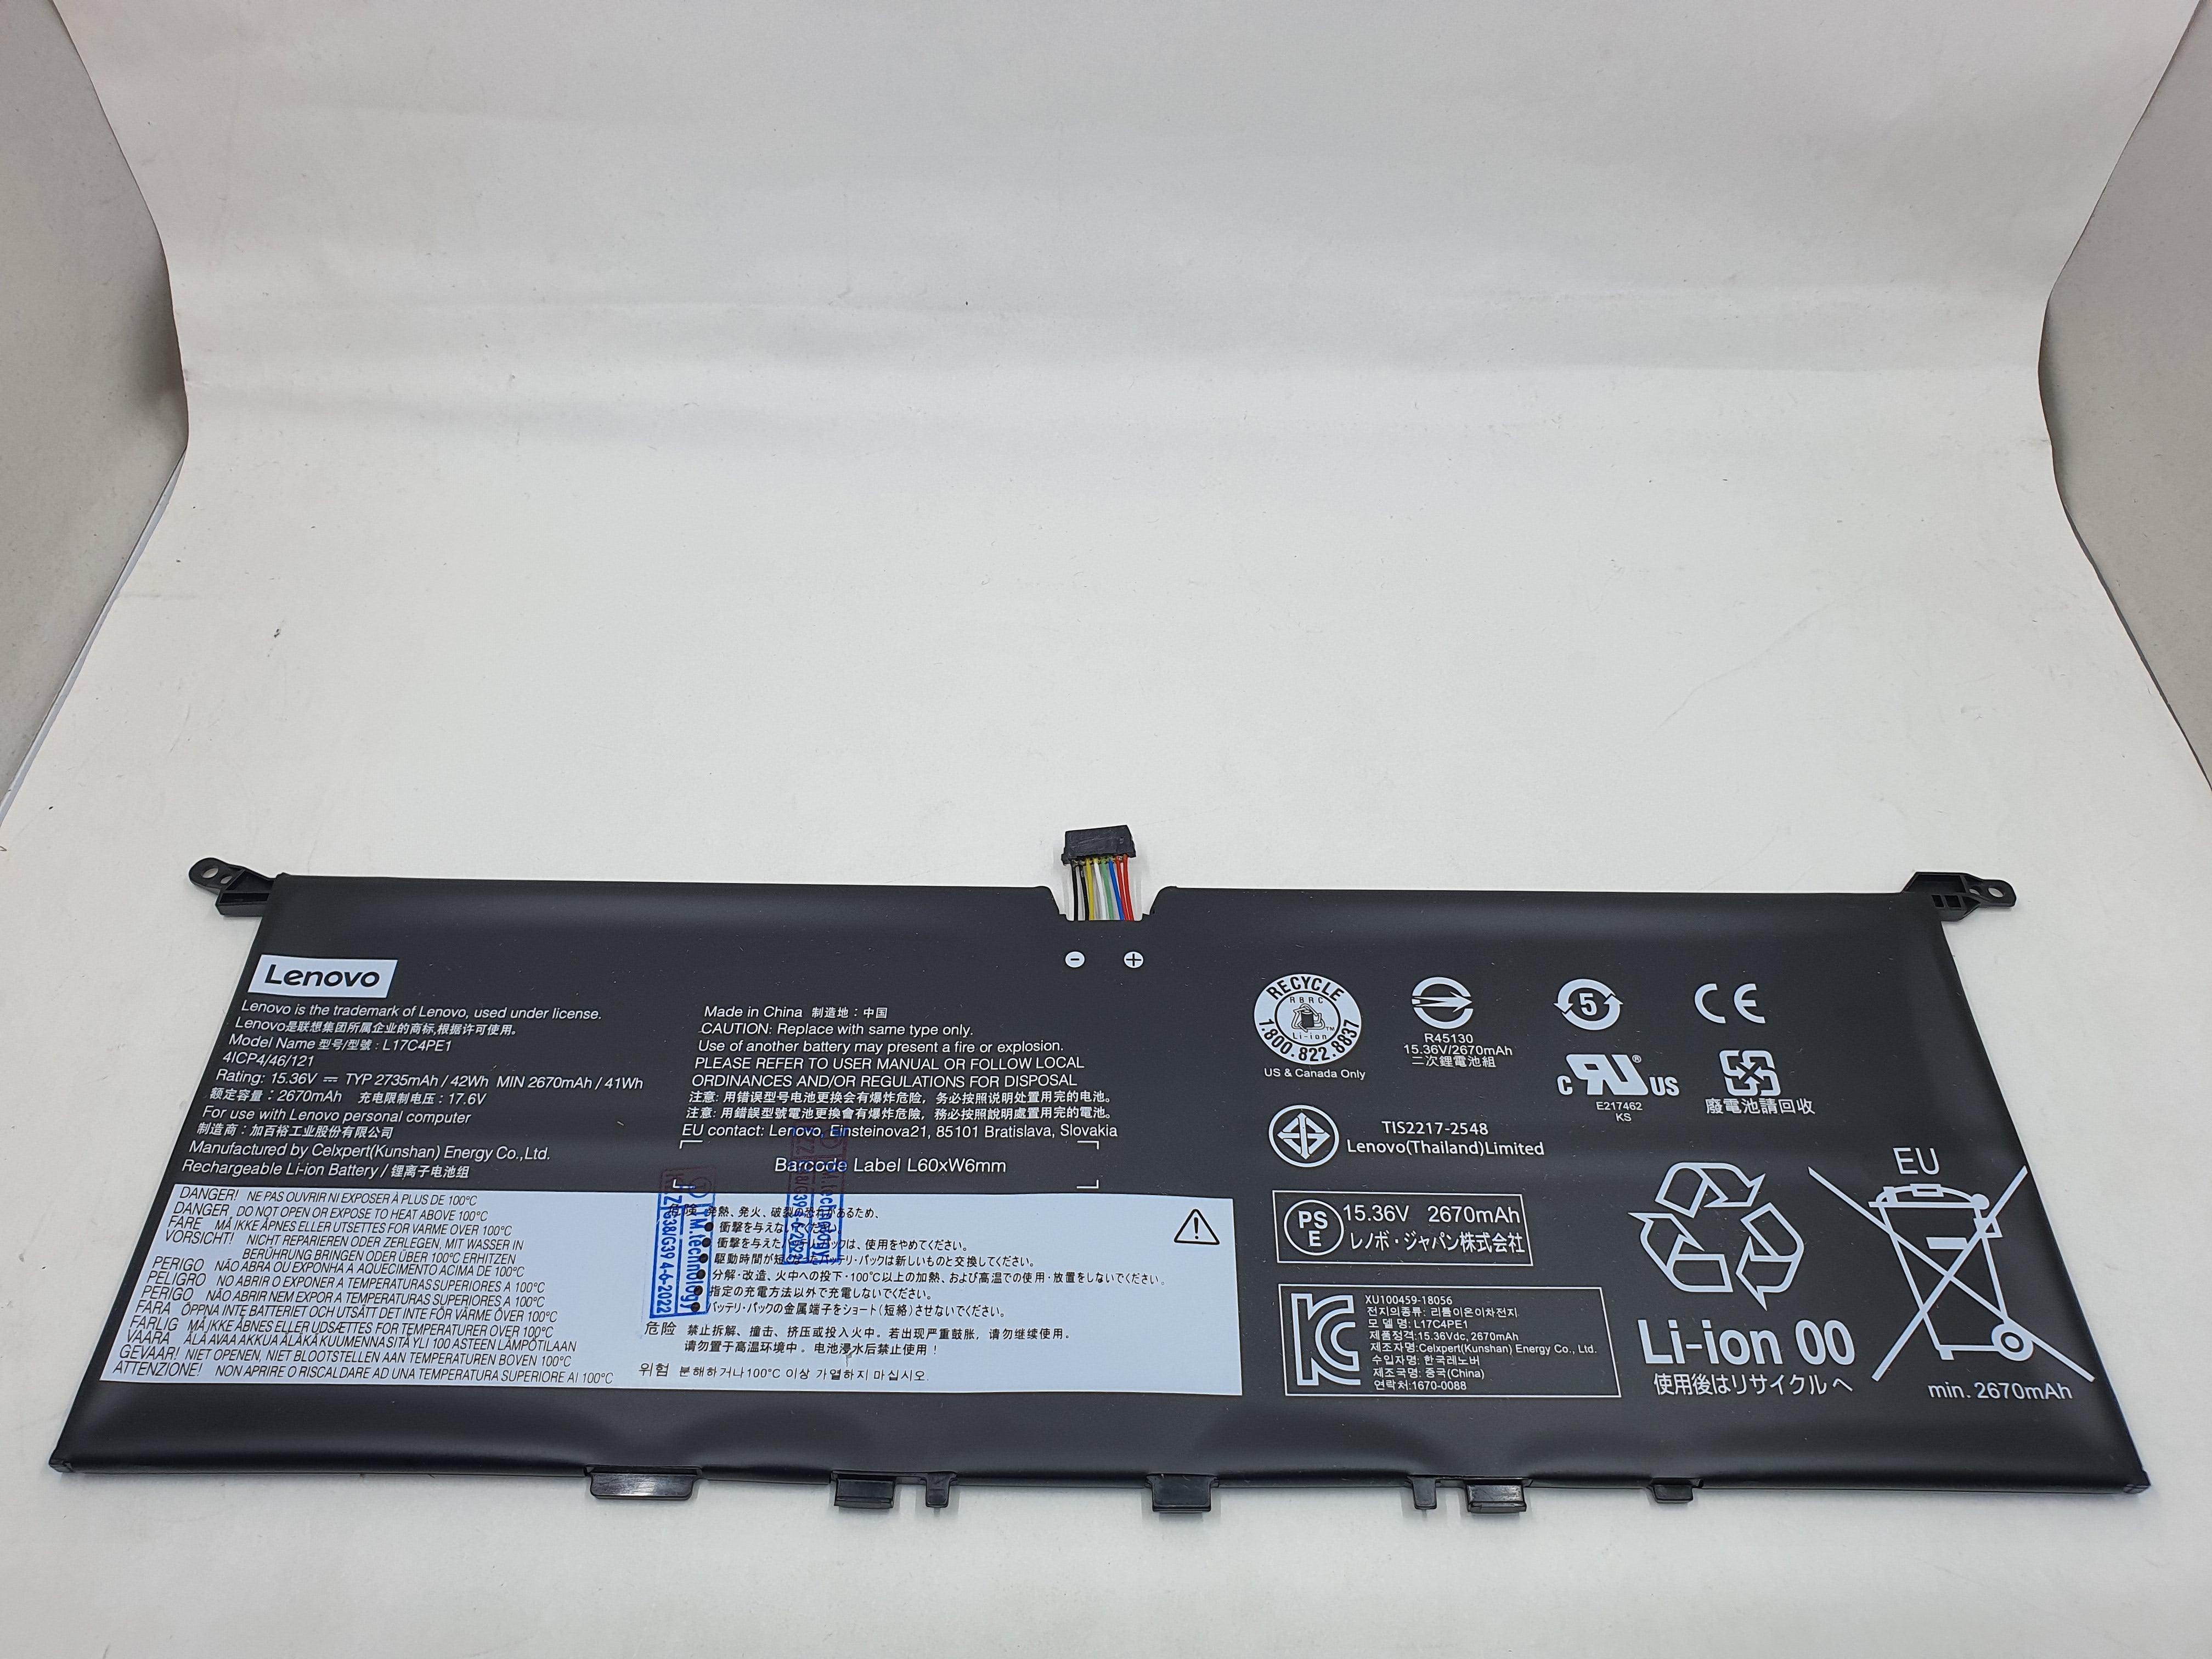 Lenovo Battery Yoga S730-13IWL A1 for Replacement - Lenovo YOGA S730-13IWL